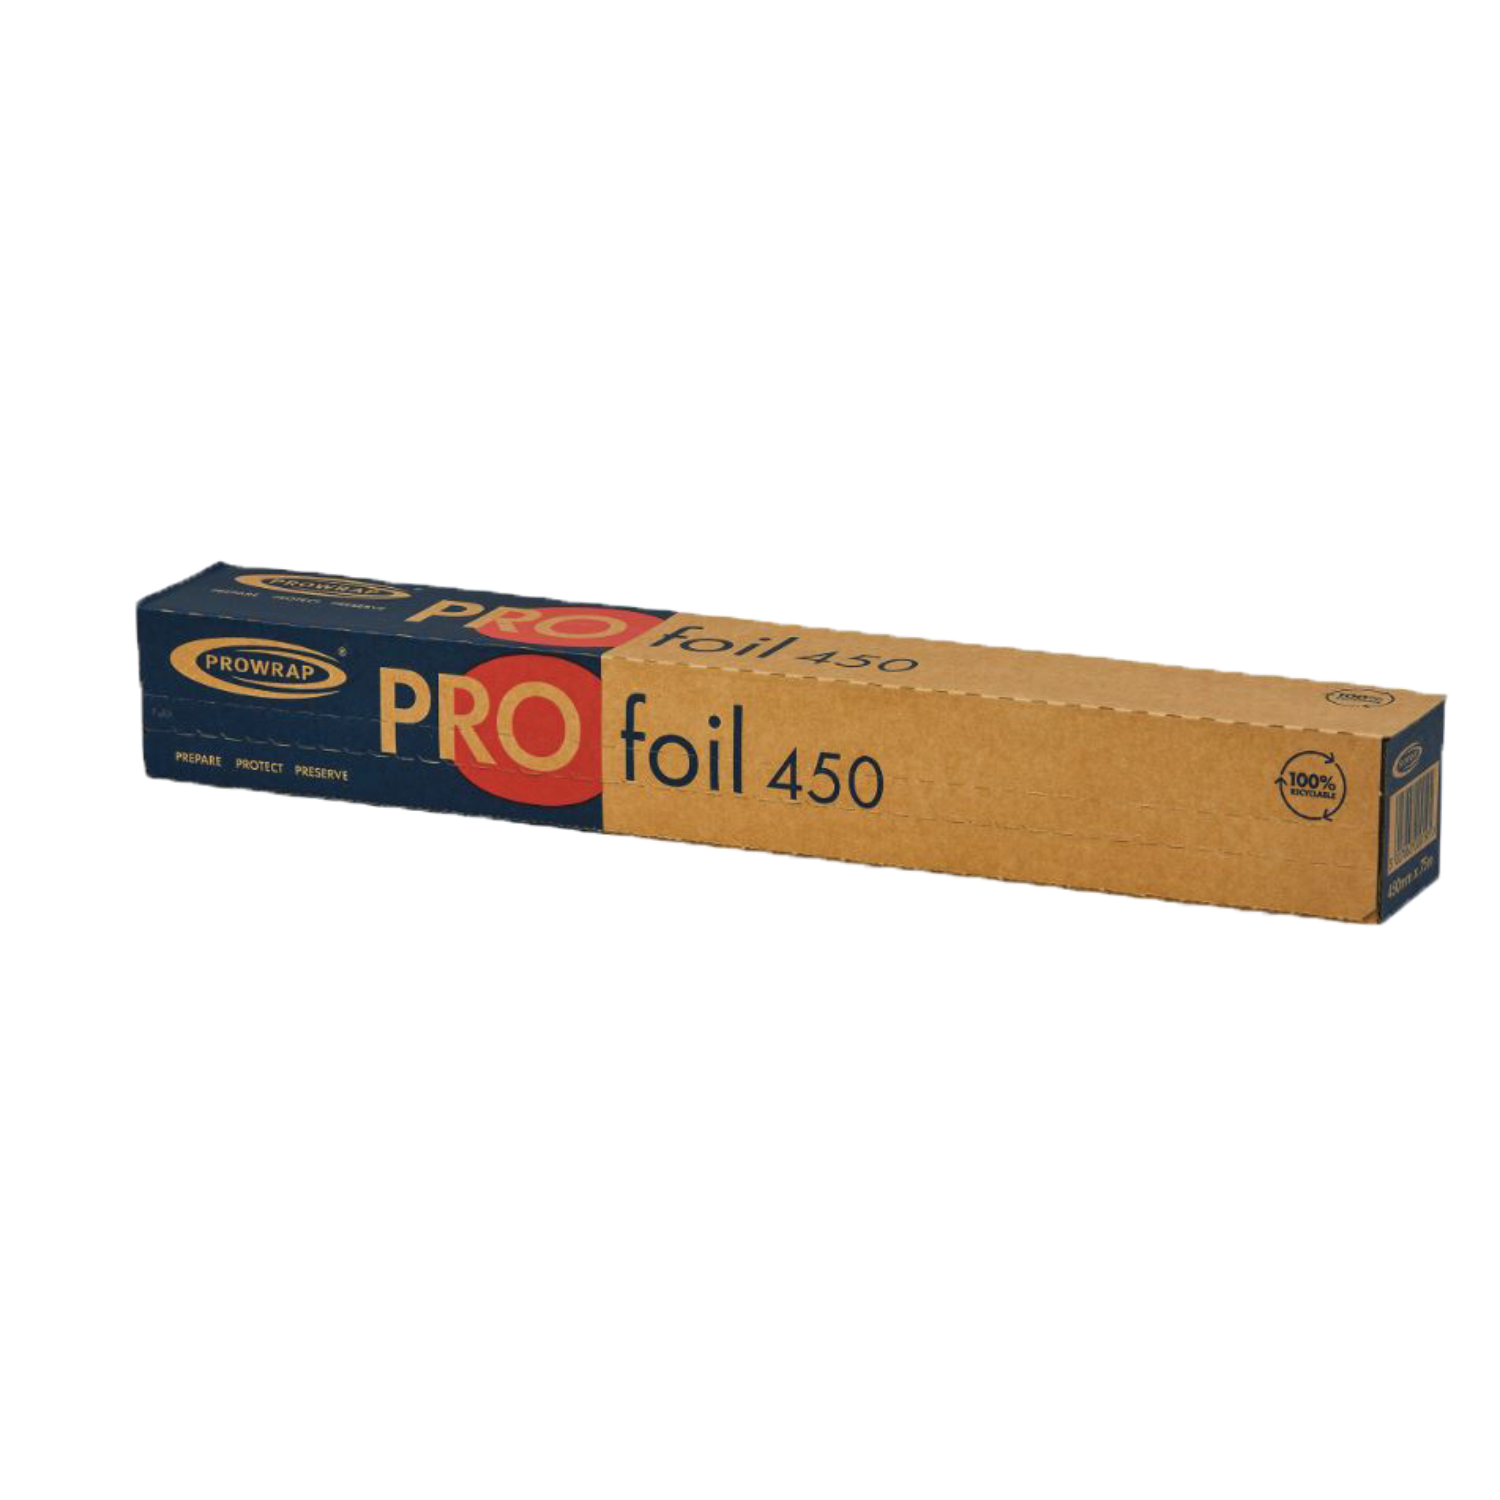 Tin Foil Roll 450mm - 3 Pack